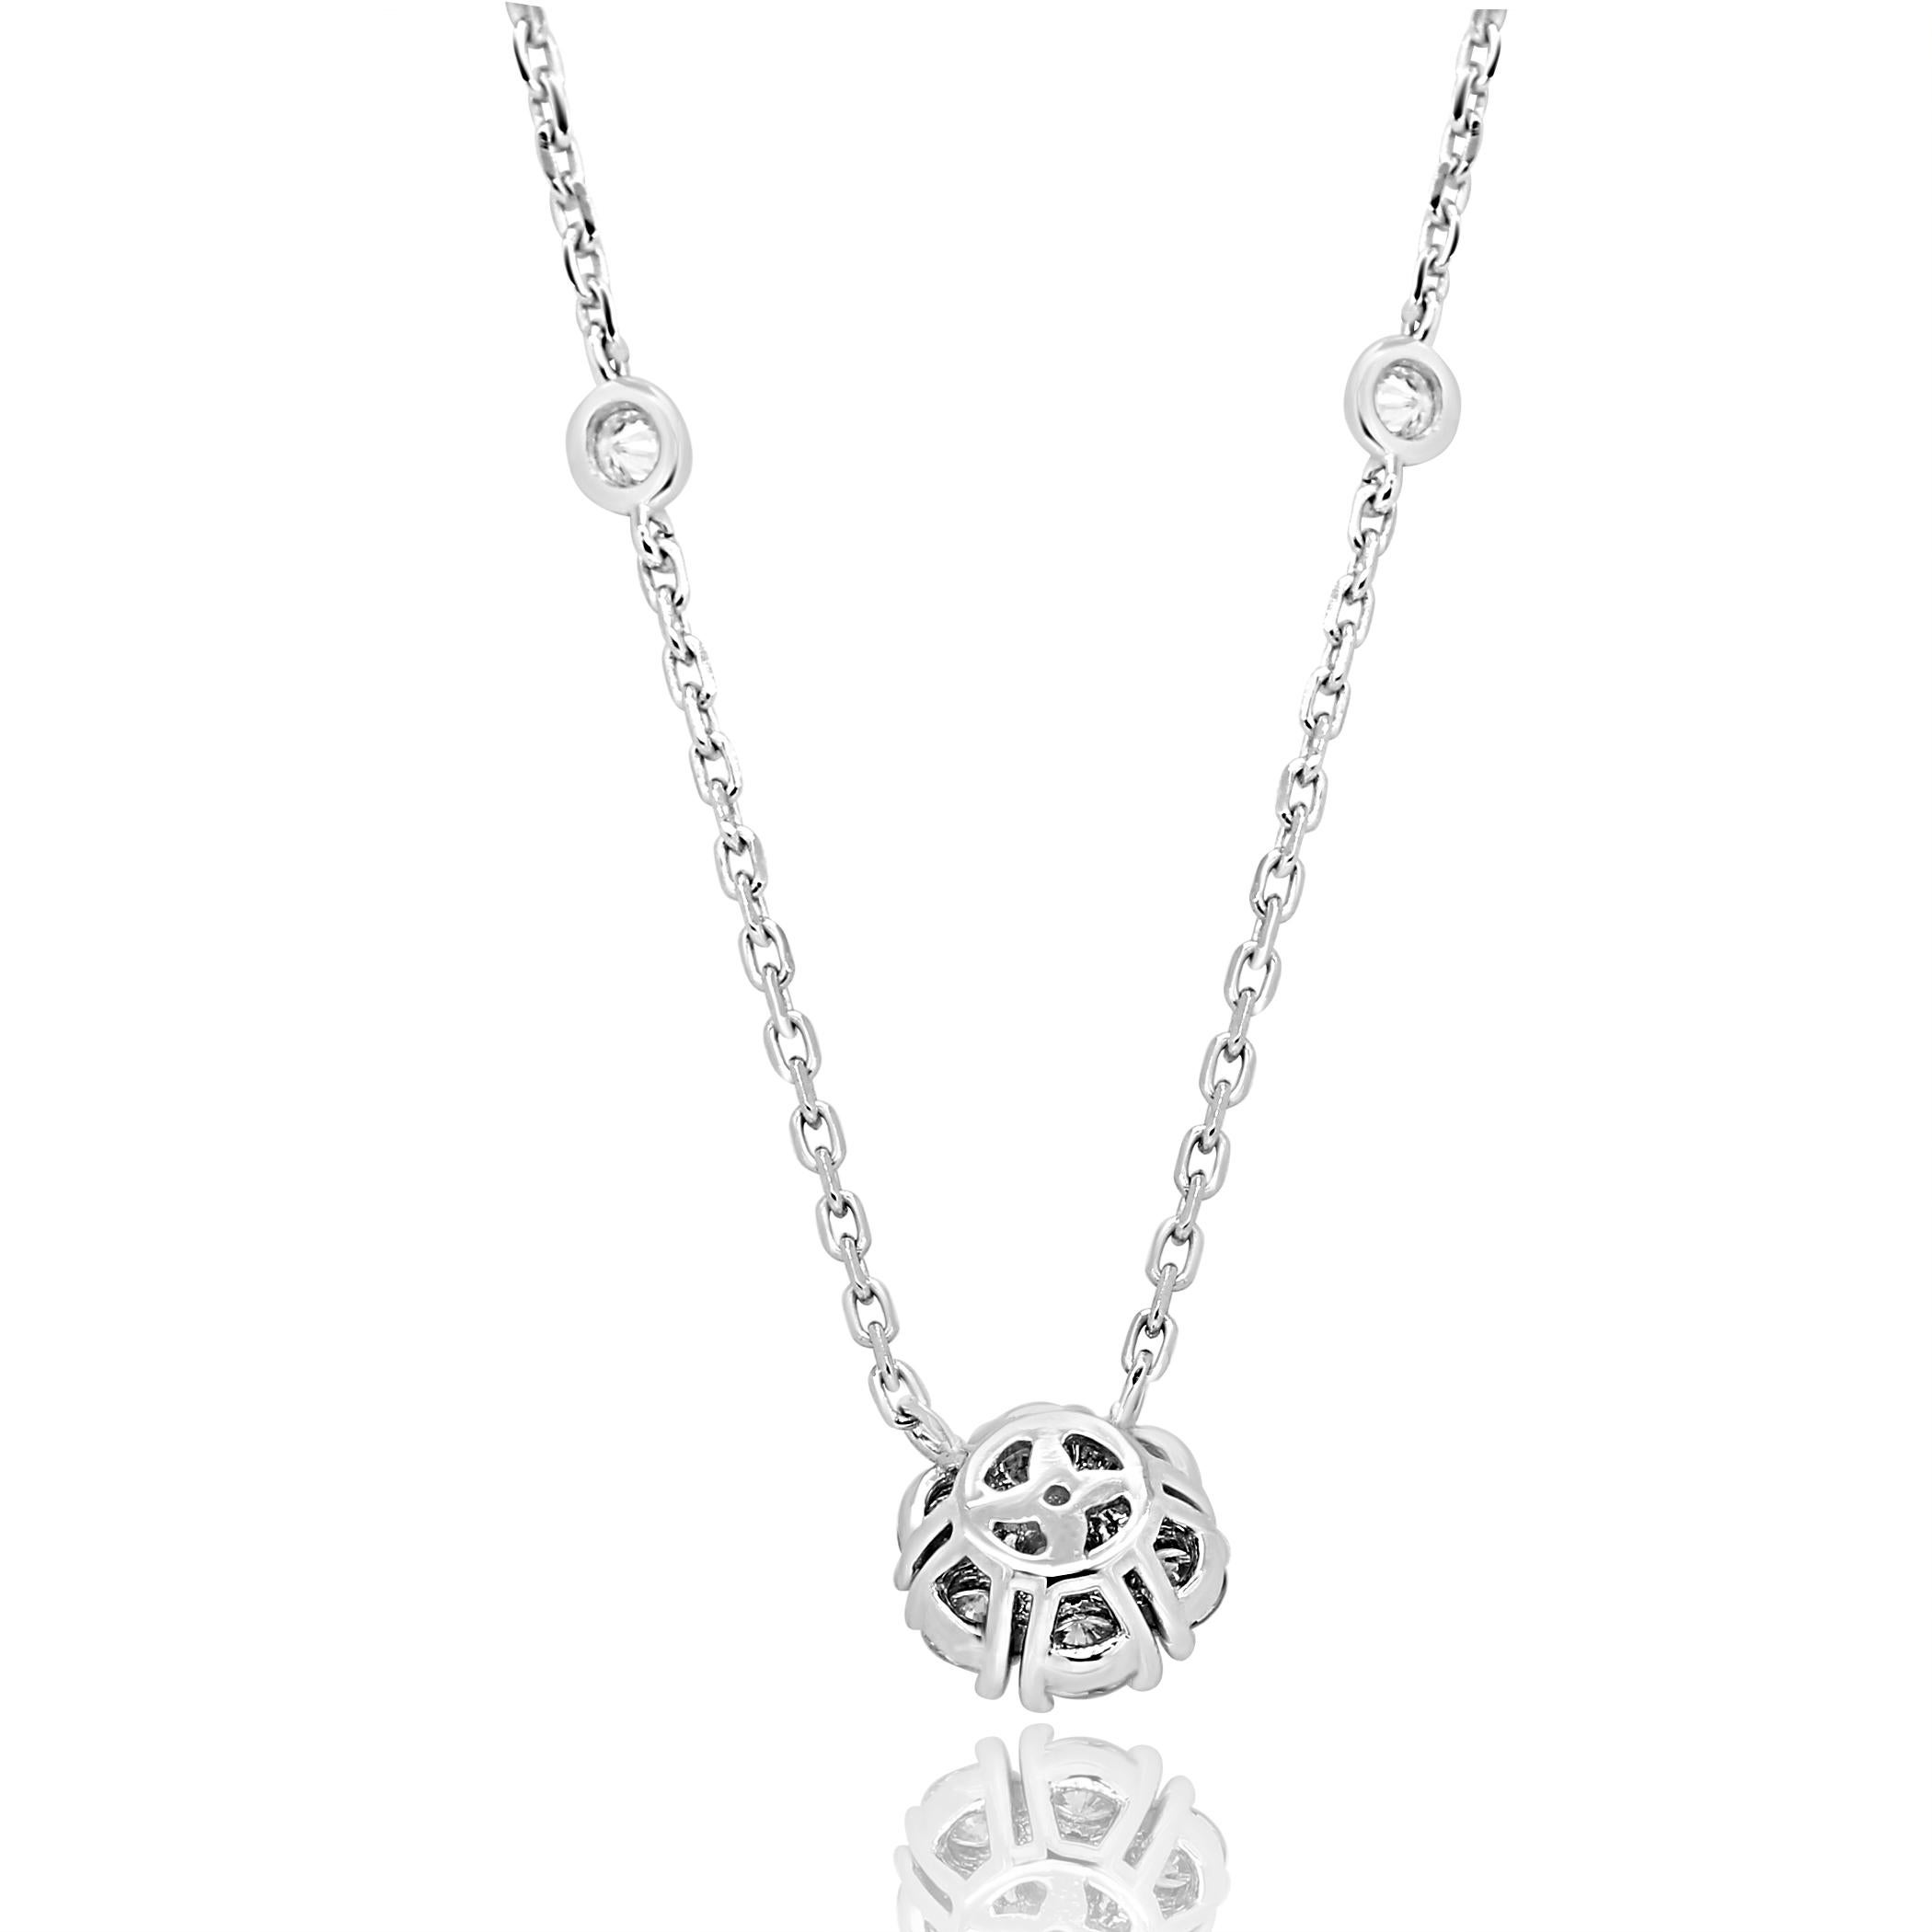 Modern White Diamond Round Cluster Pendant Diamond by Yard Chain Drop Necklace